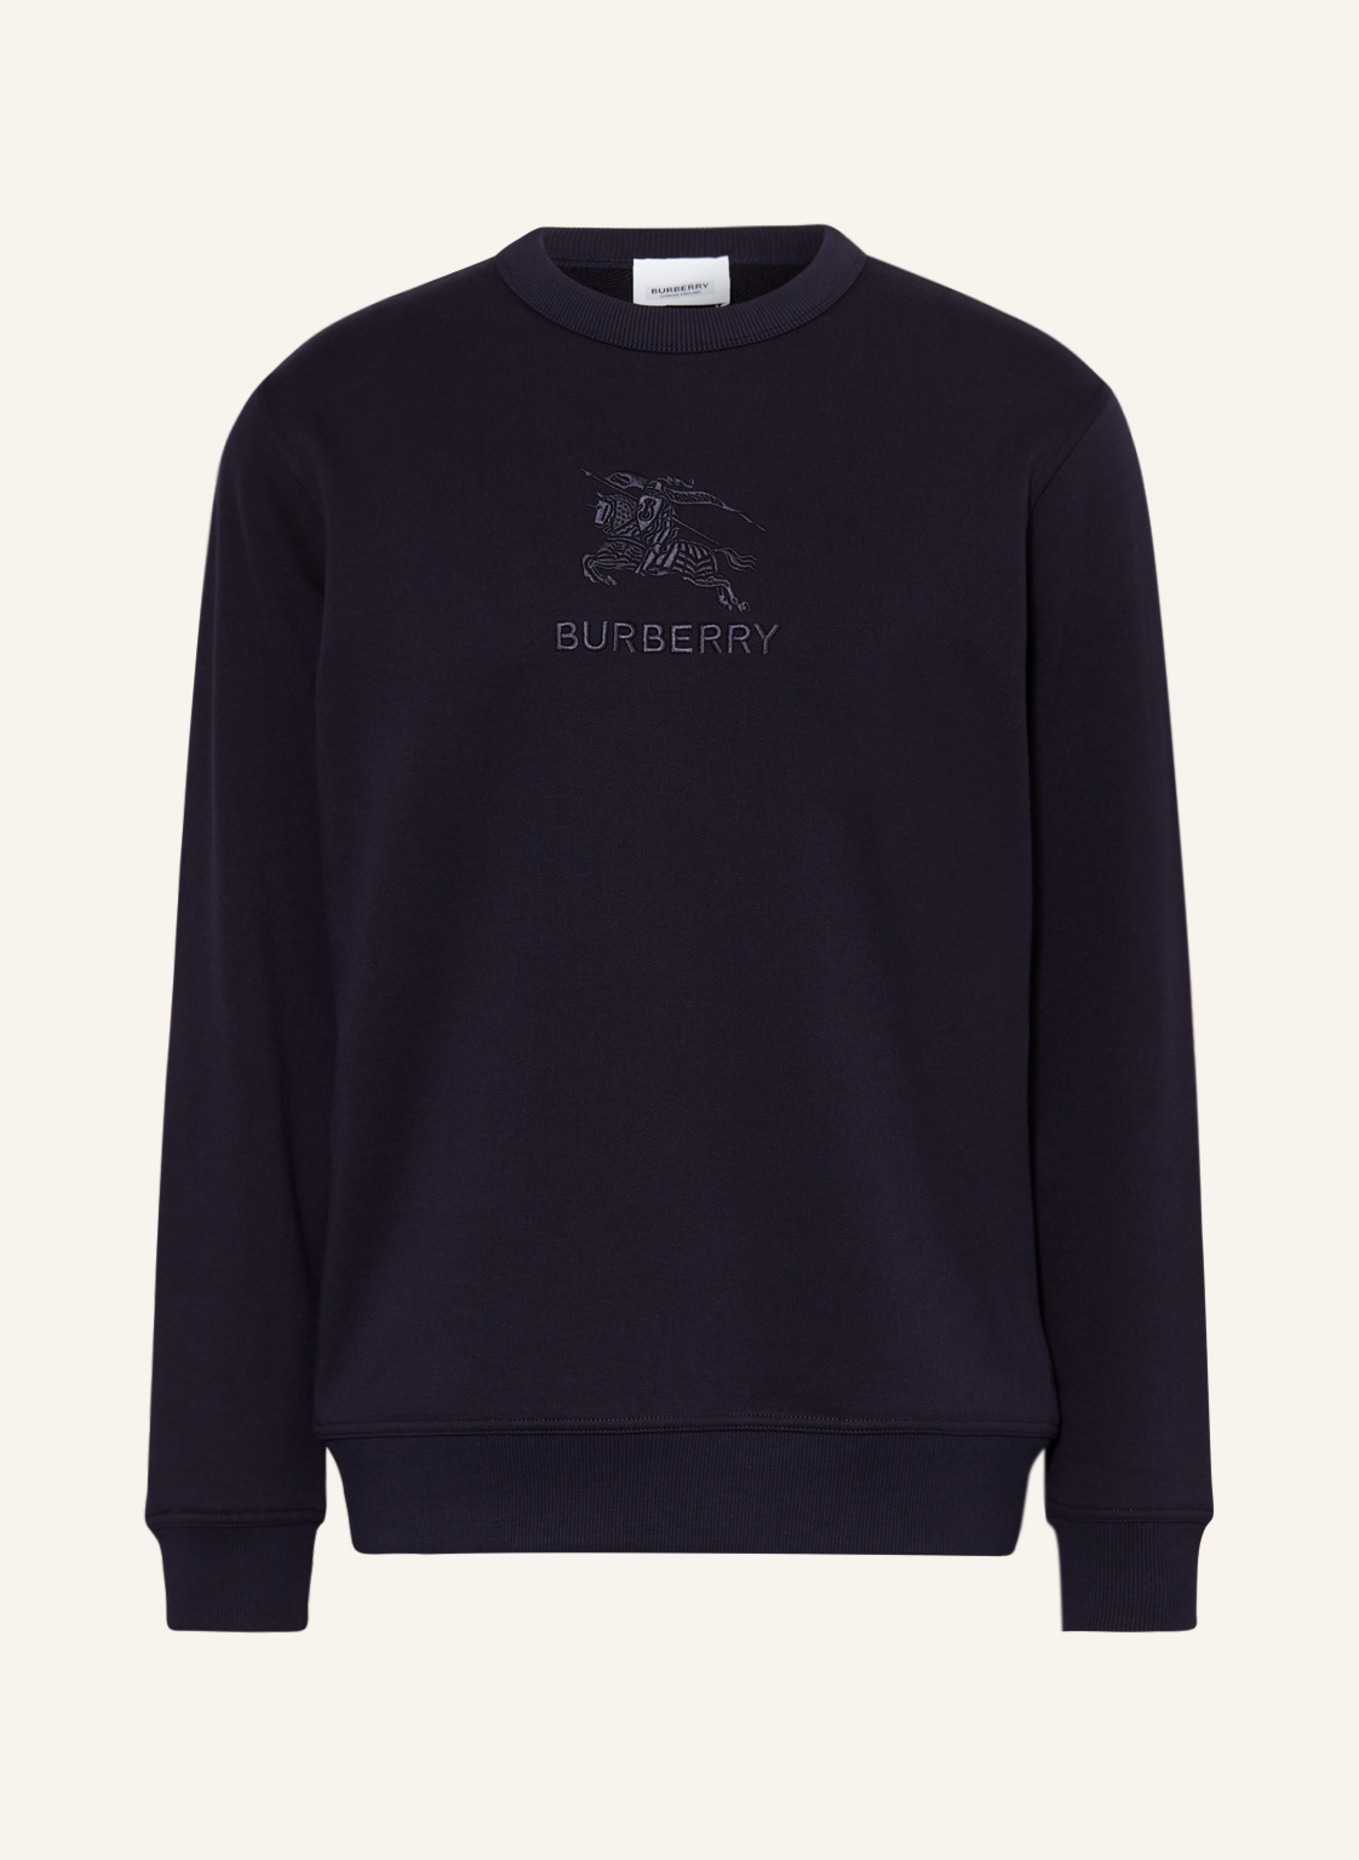 BURBERRY Sweatshirt TYRALL, Farbe: DUNKELBLAU (Bild 1)